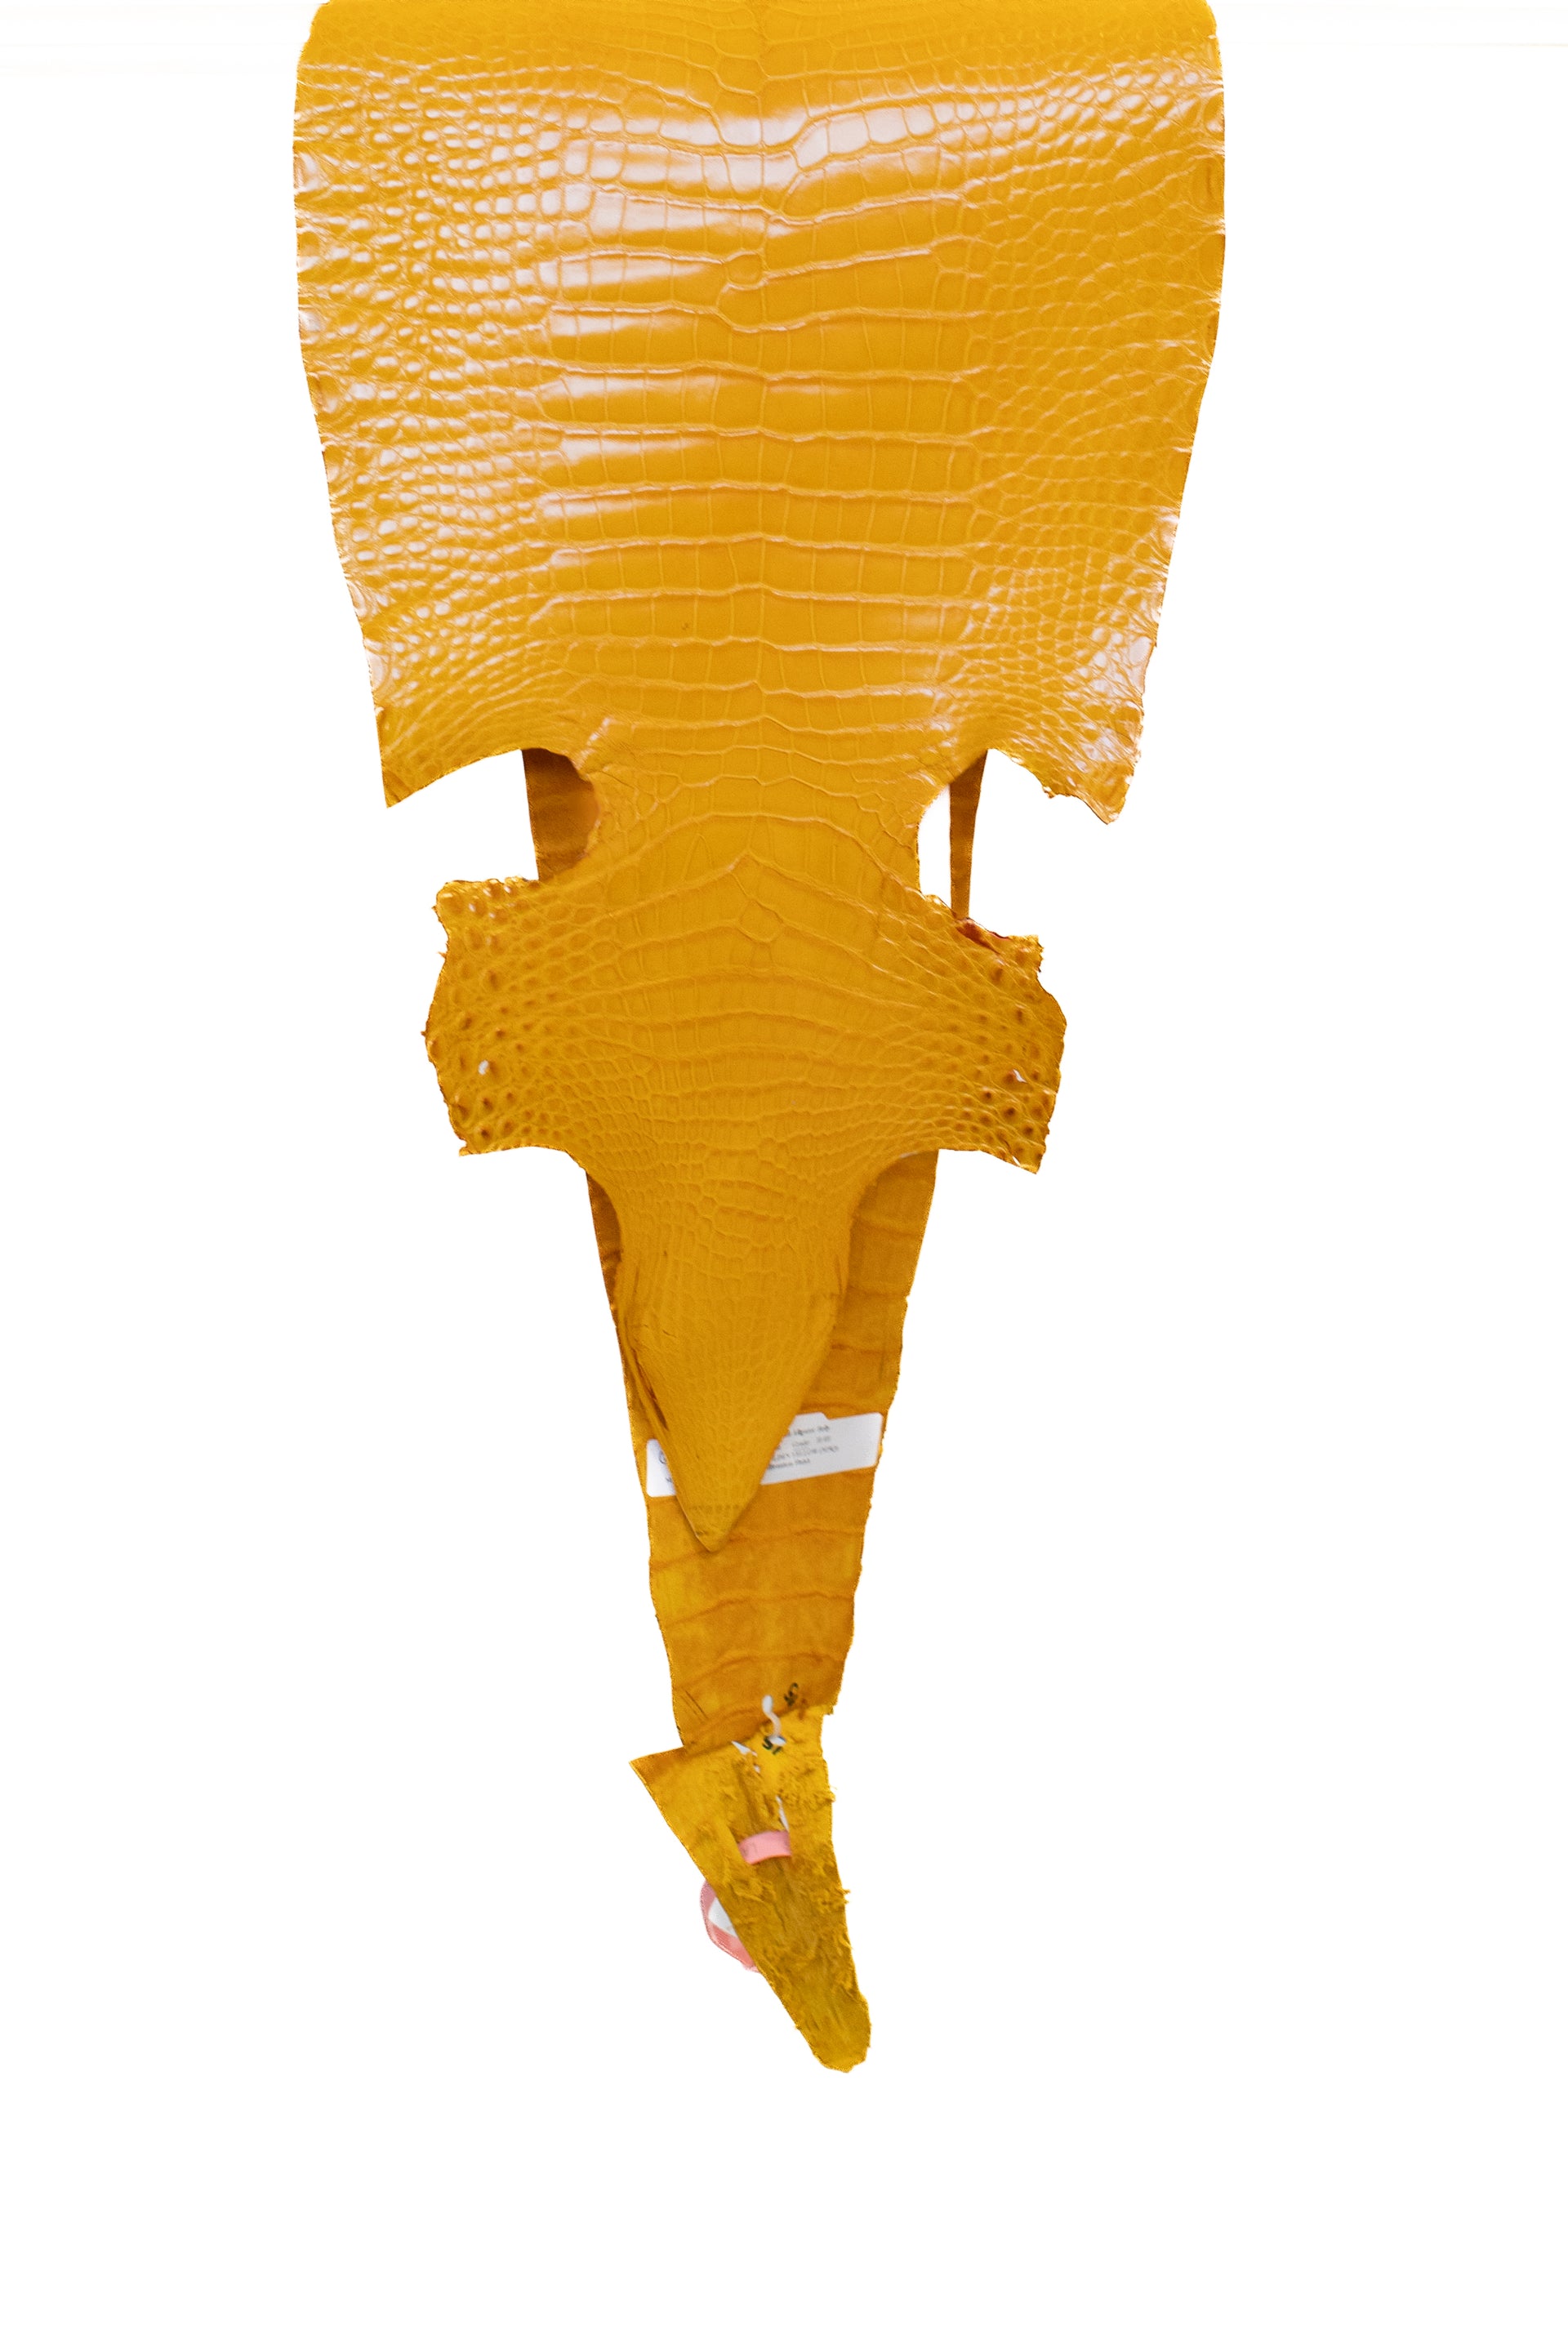 29 cm Grade 2/3 Golden Yellow Millennium Farm Raised American Alligator Leather - Tag: LA21-0328760